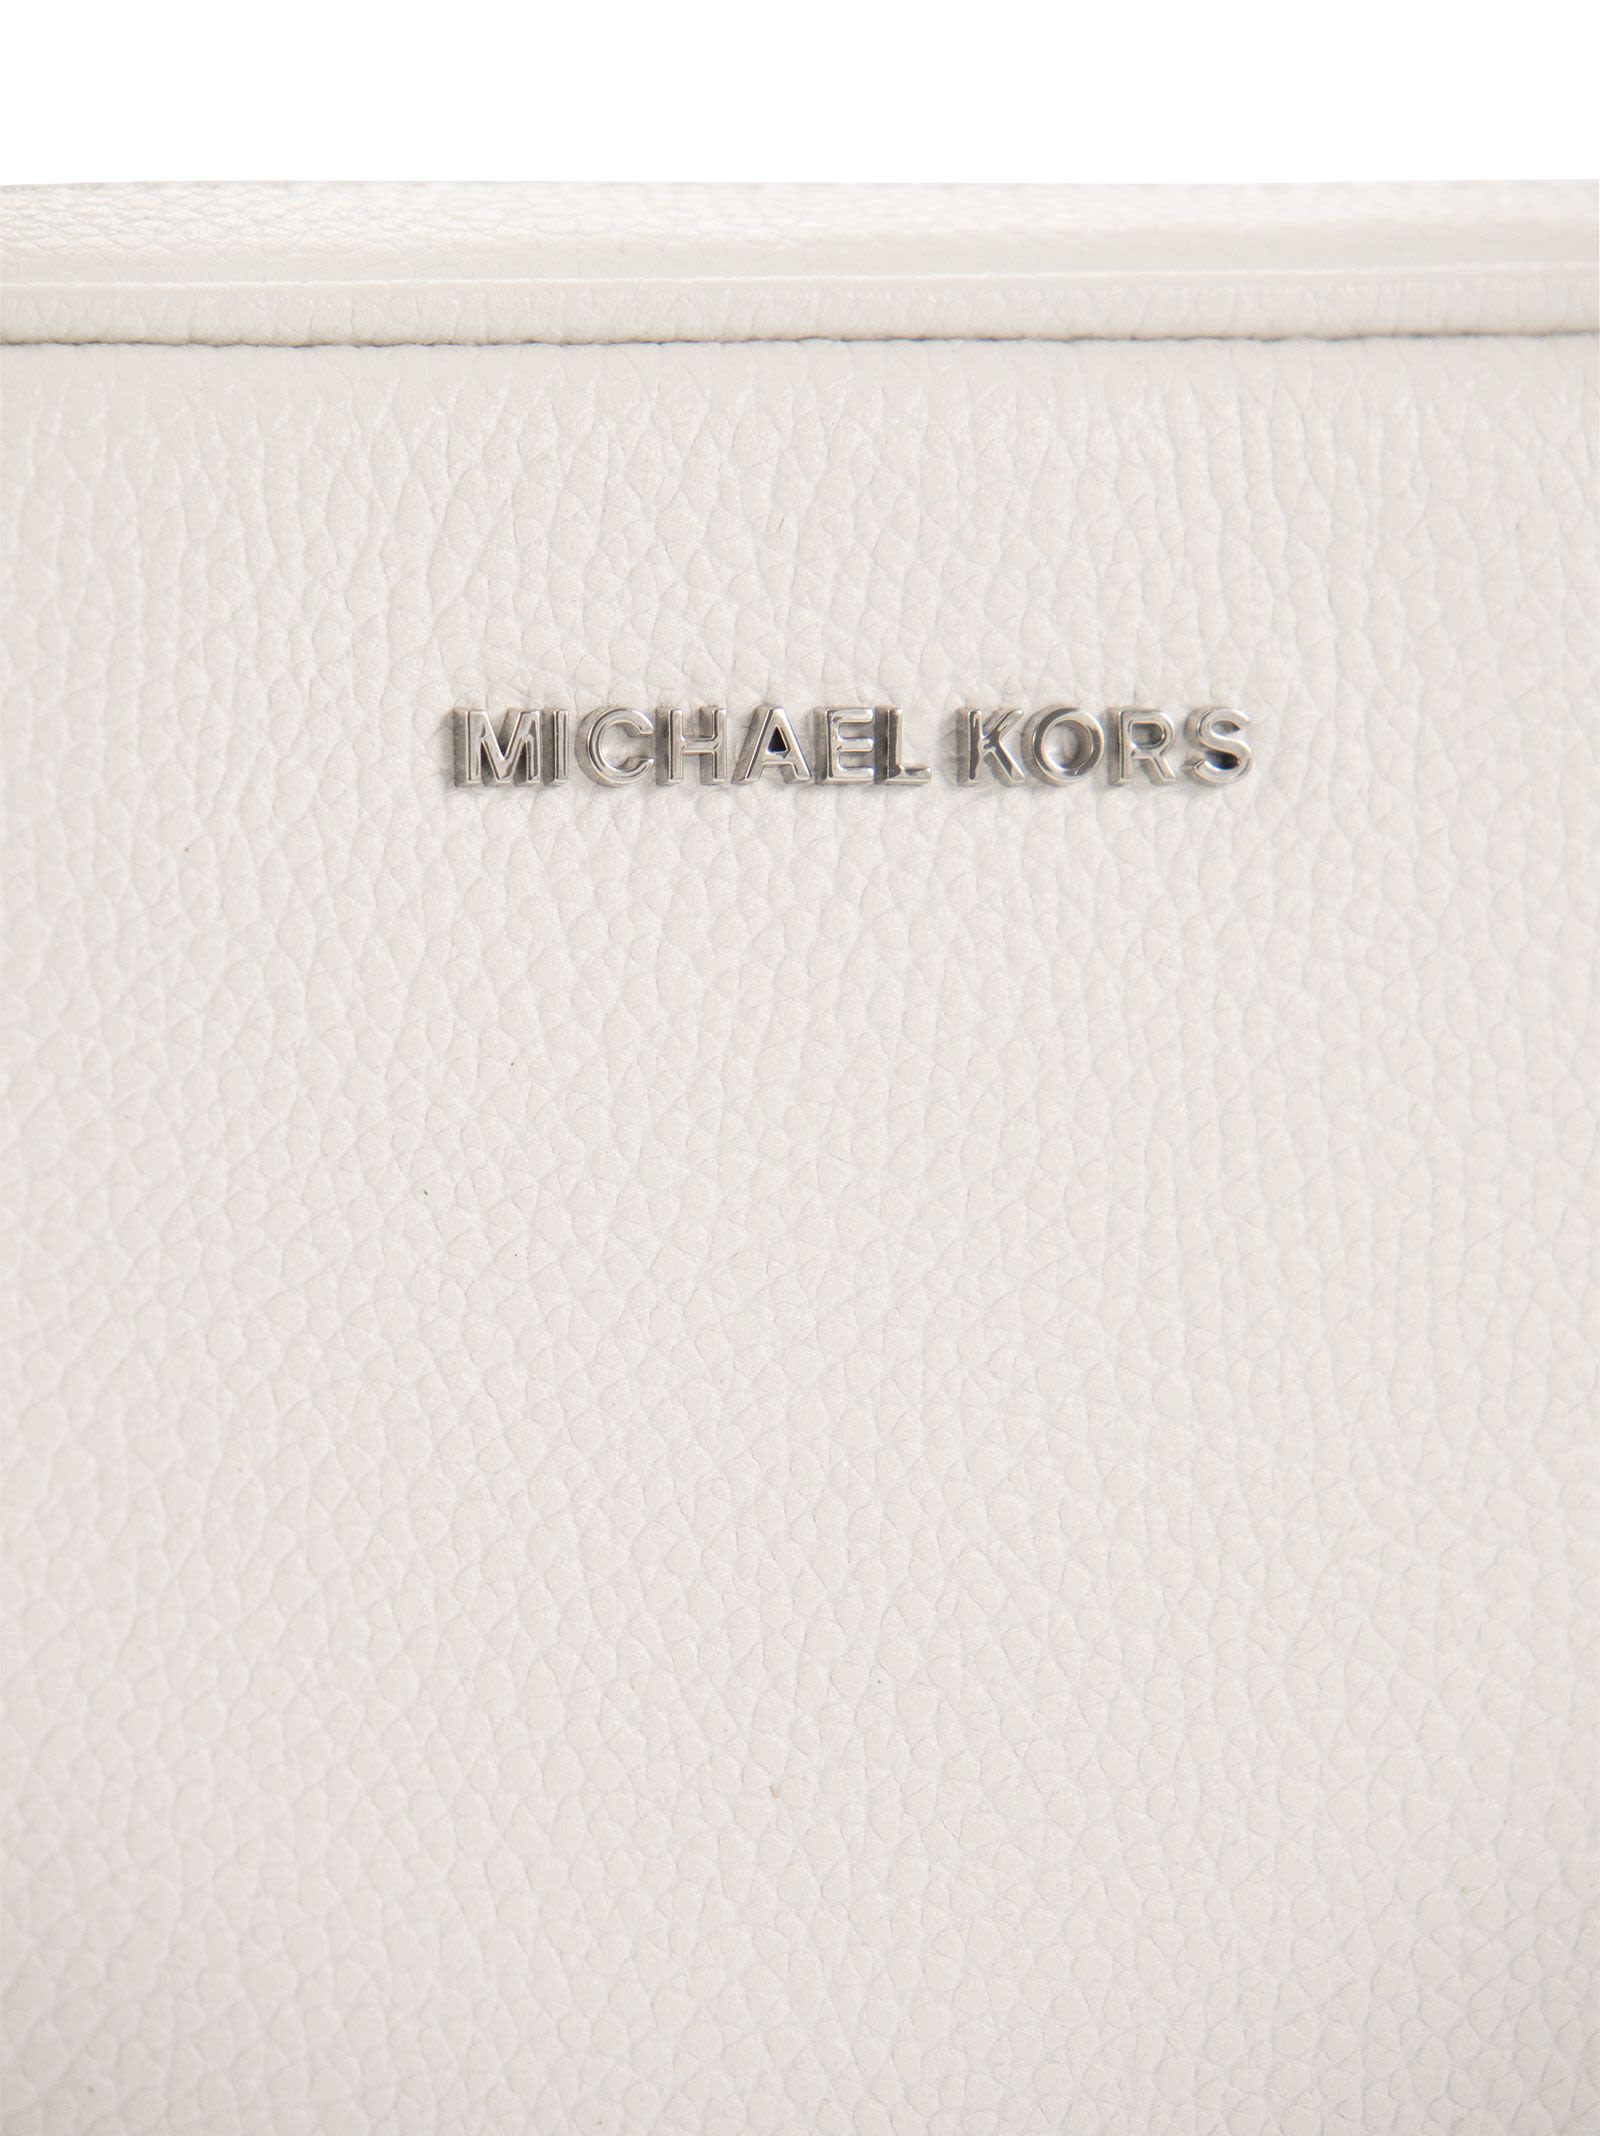 Buy Michael Kors Ginny Medium Pebbled Leather Crossbody Bag - Optic White  at